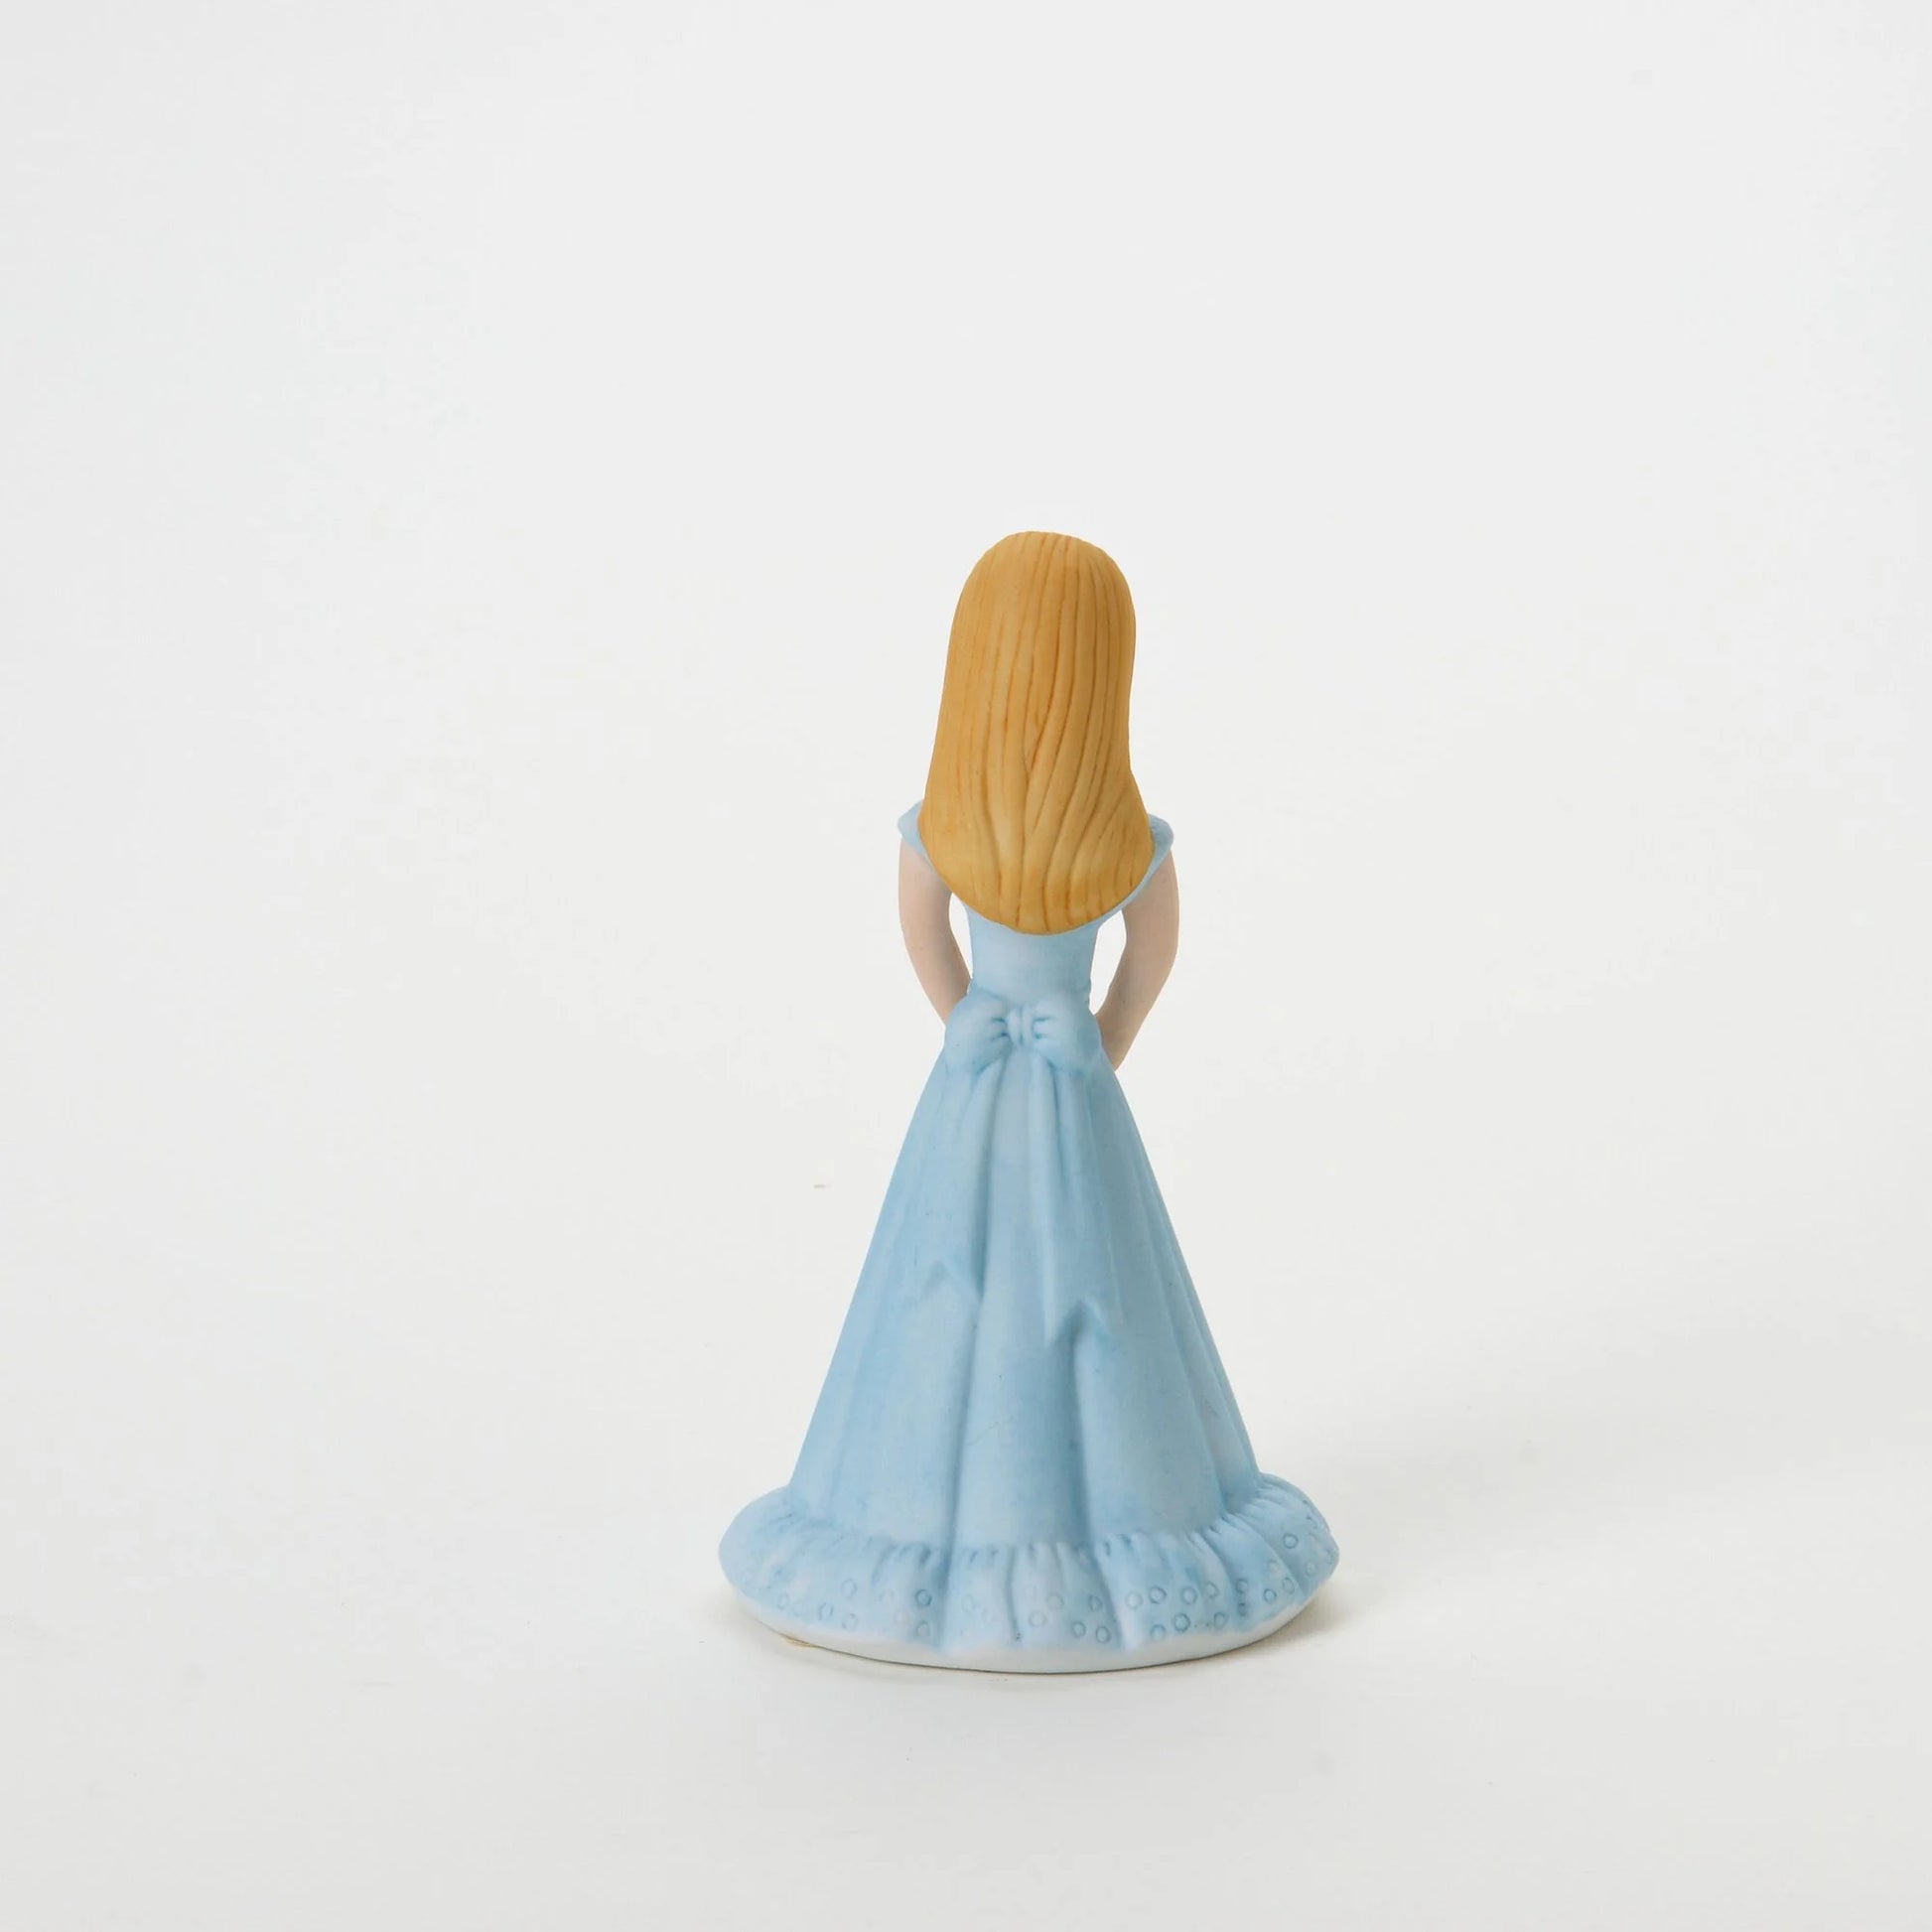 age 10 figurine back